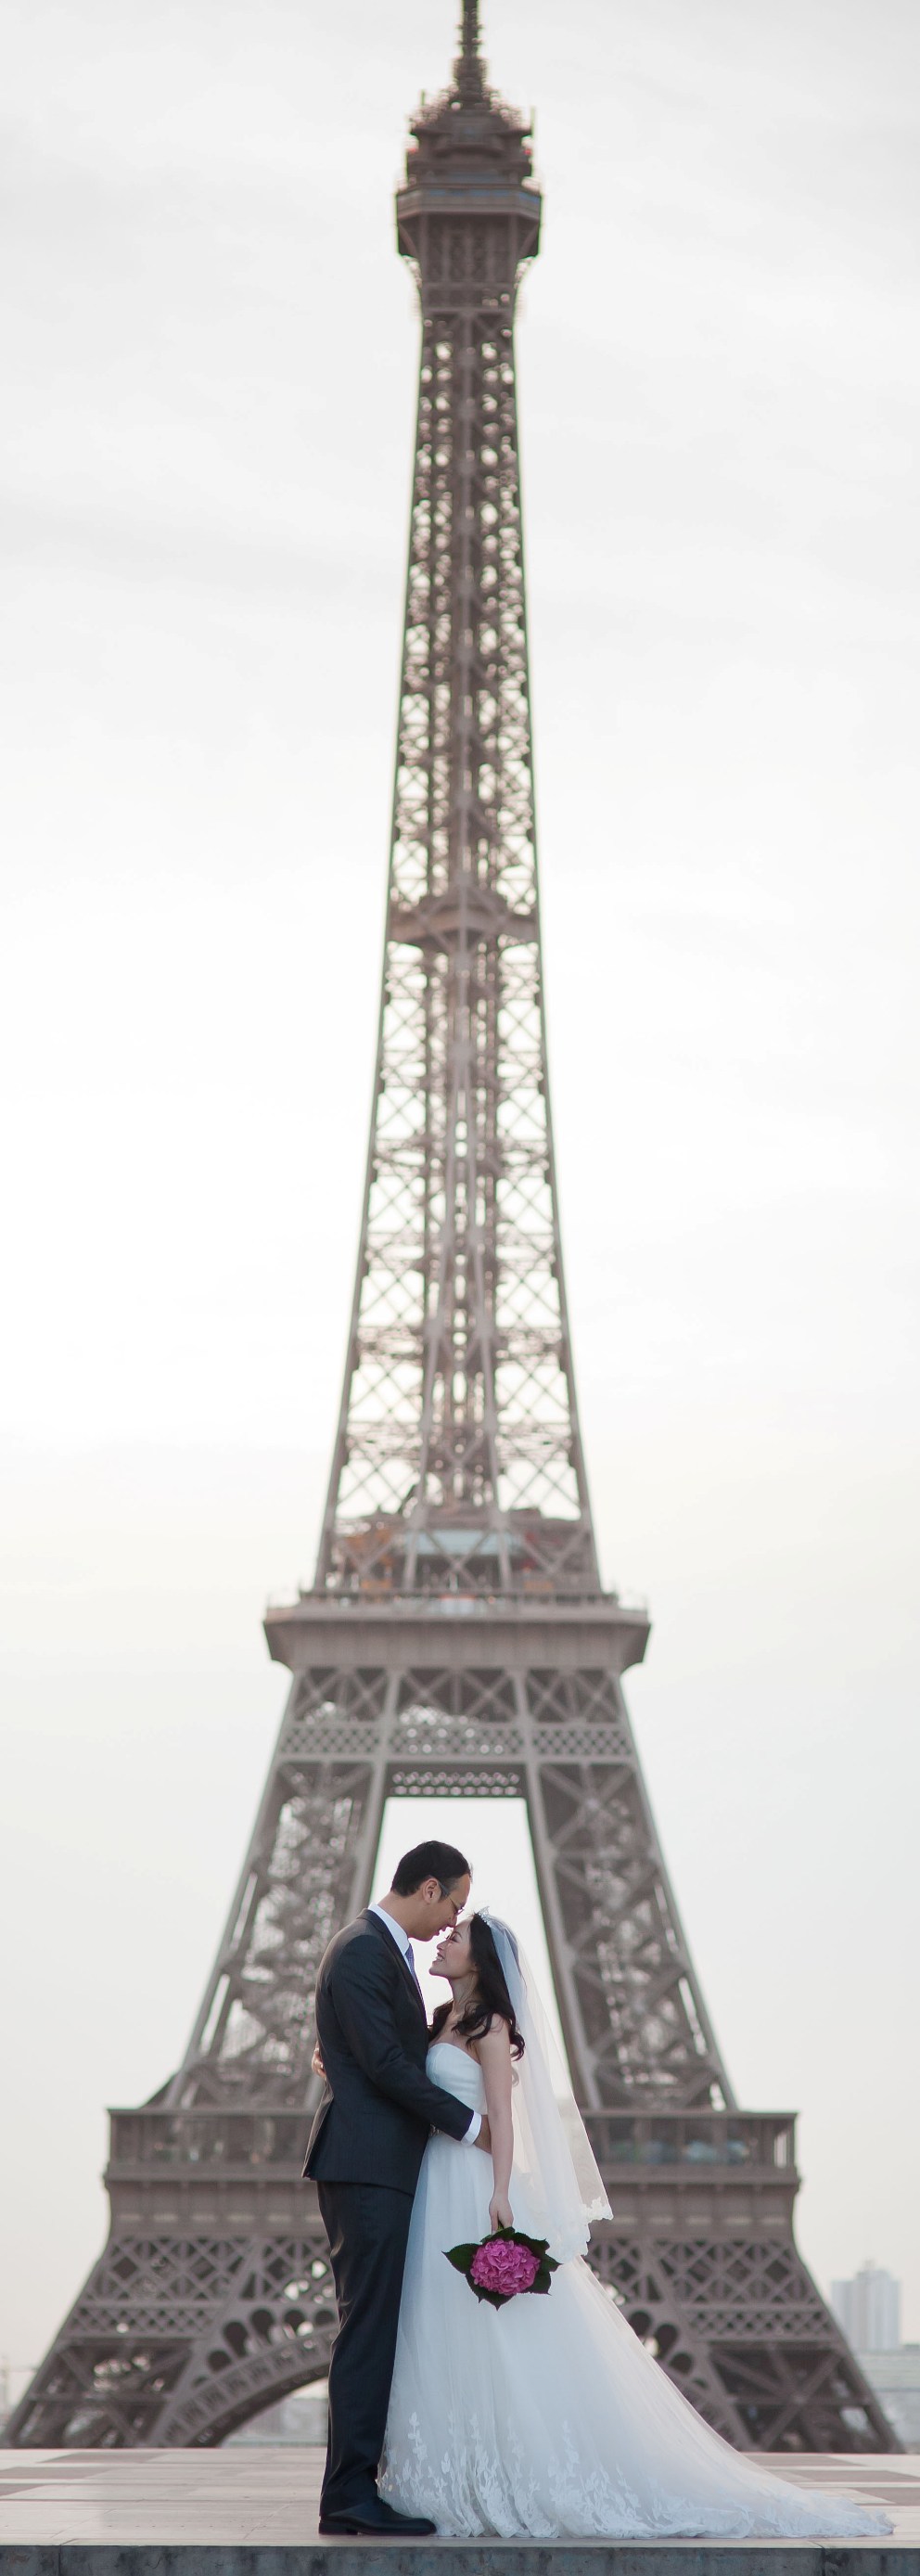 The Eiffel Tower, Paris 2